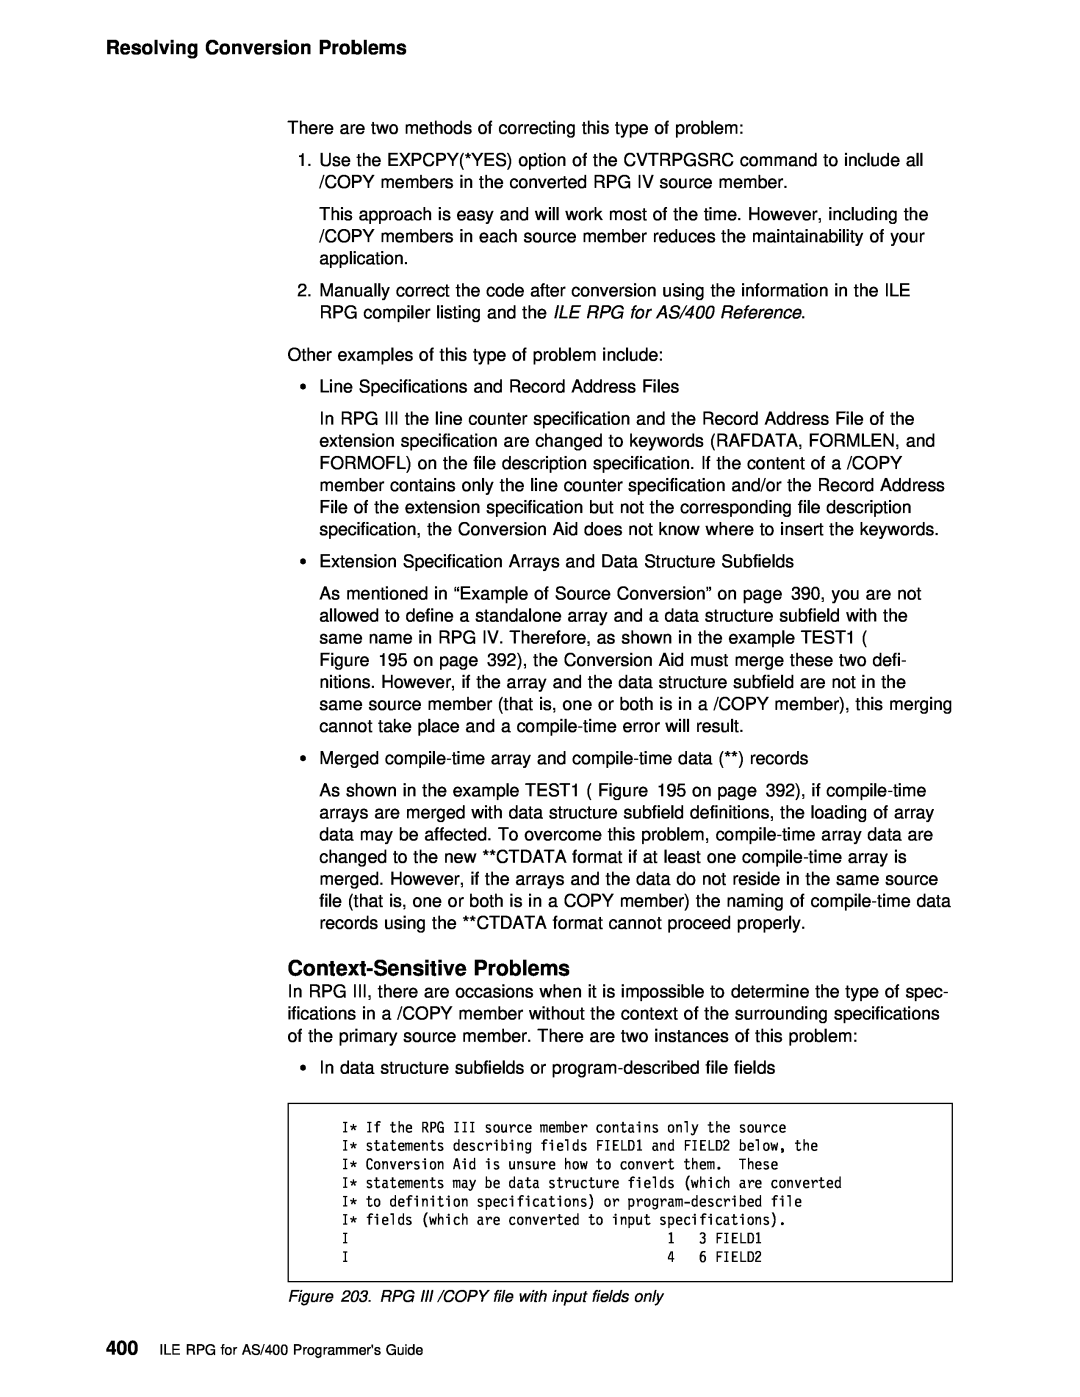 IBM AS/400 manual Context-Sensitive Problems, Resolving Conversion Problems 